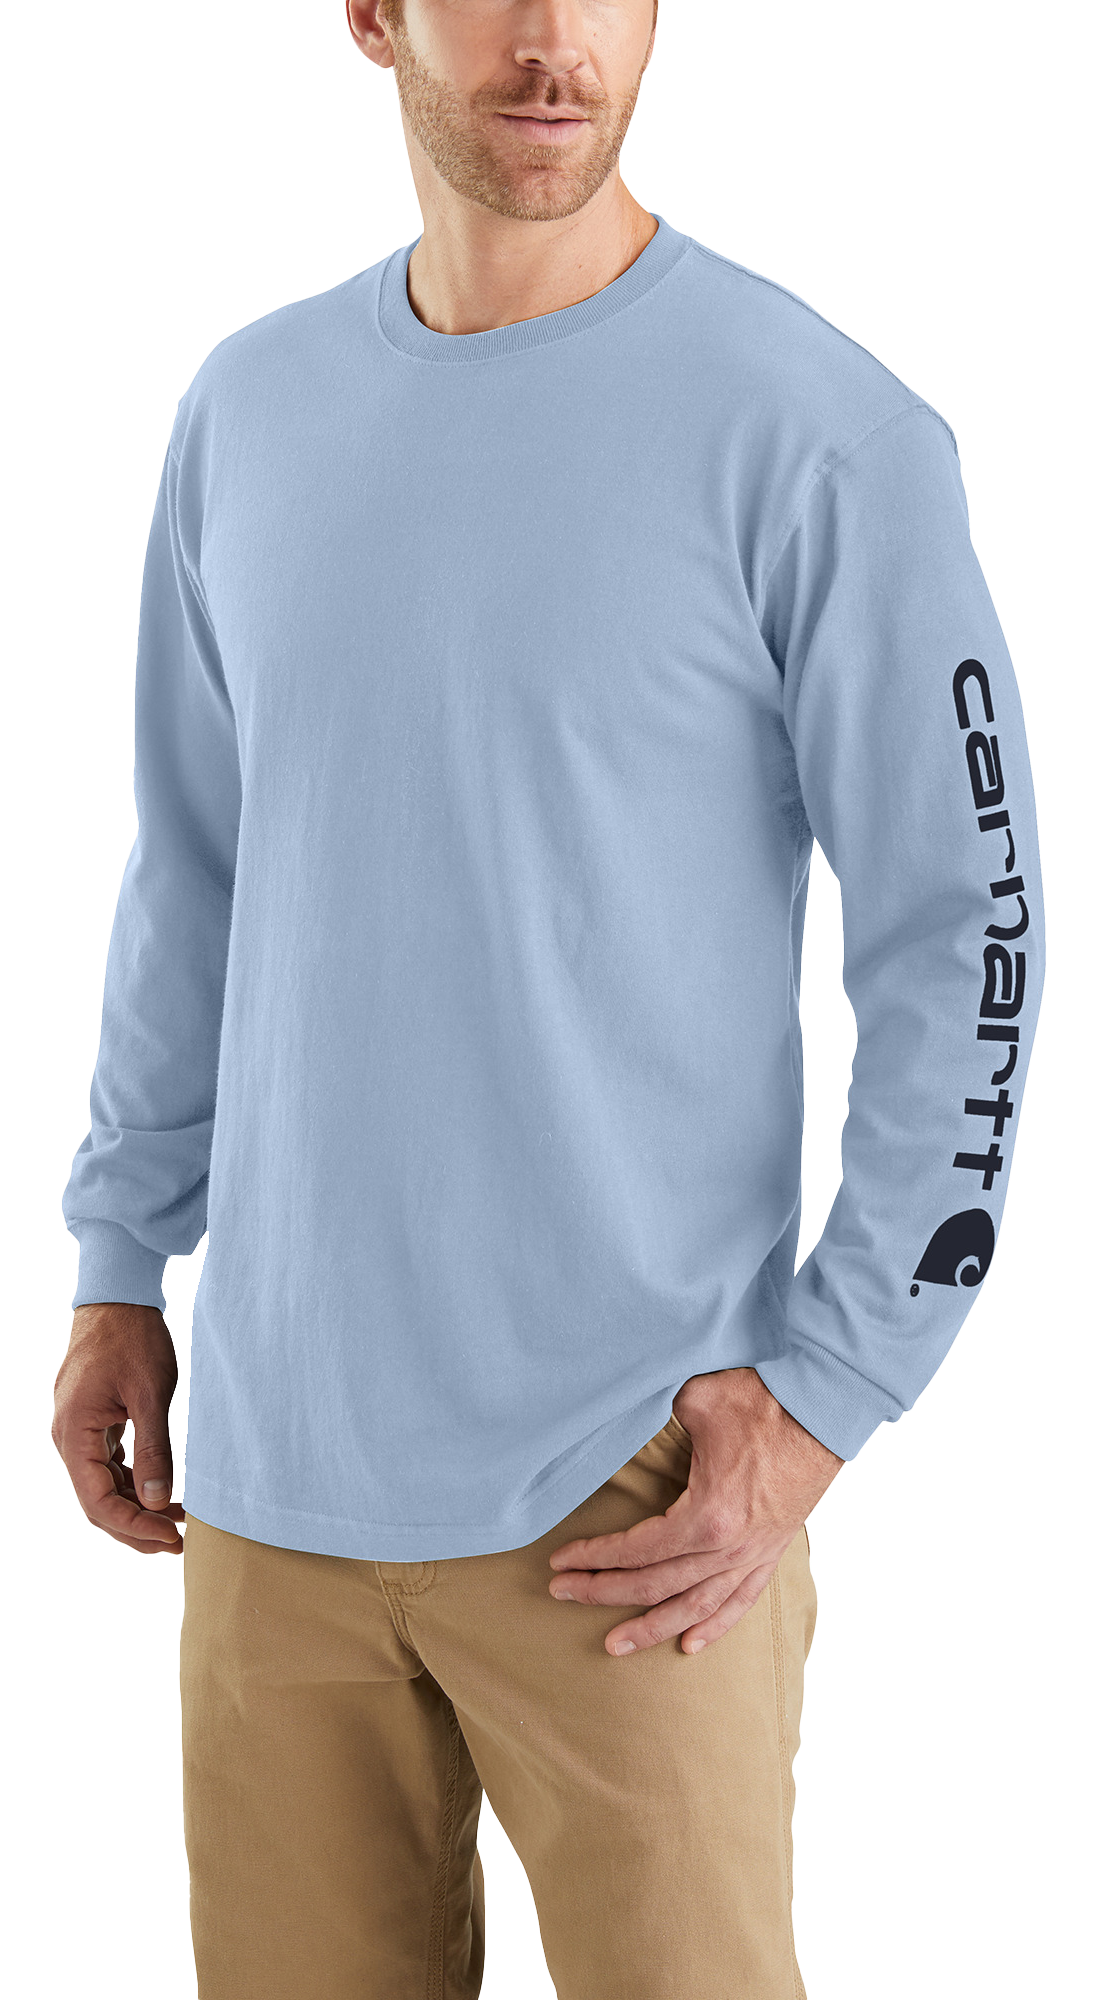 Carhartt Men's Long Sleeve Graphic Logo T-Shirt, Heather Gray, XL